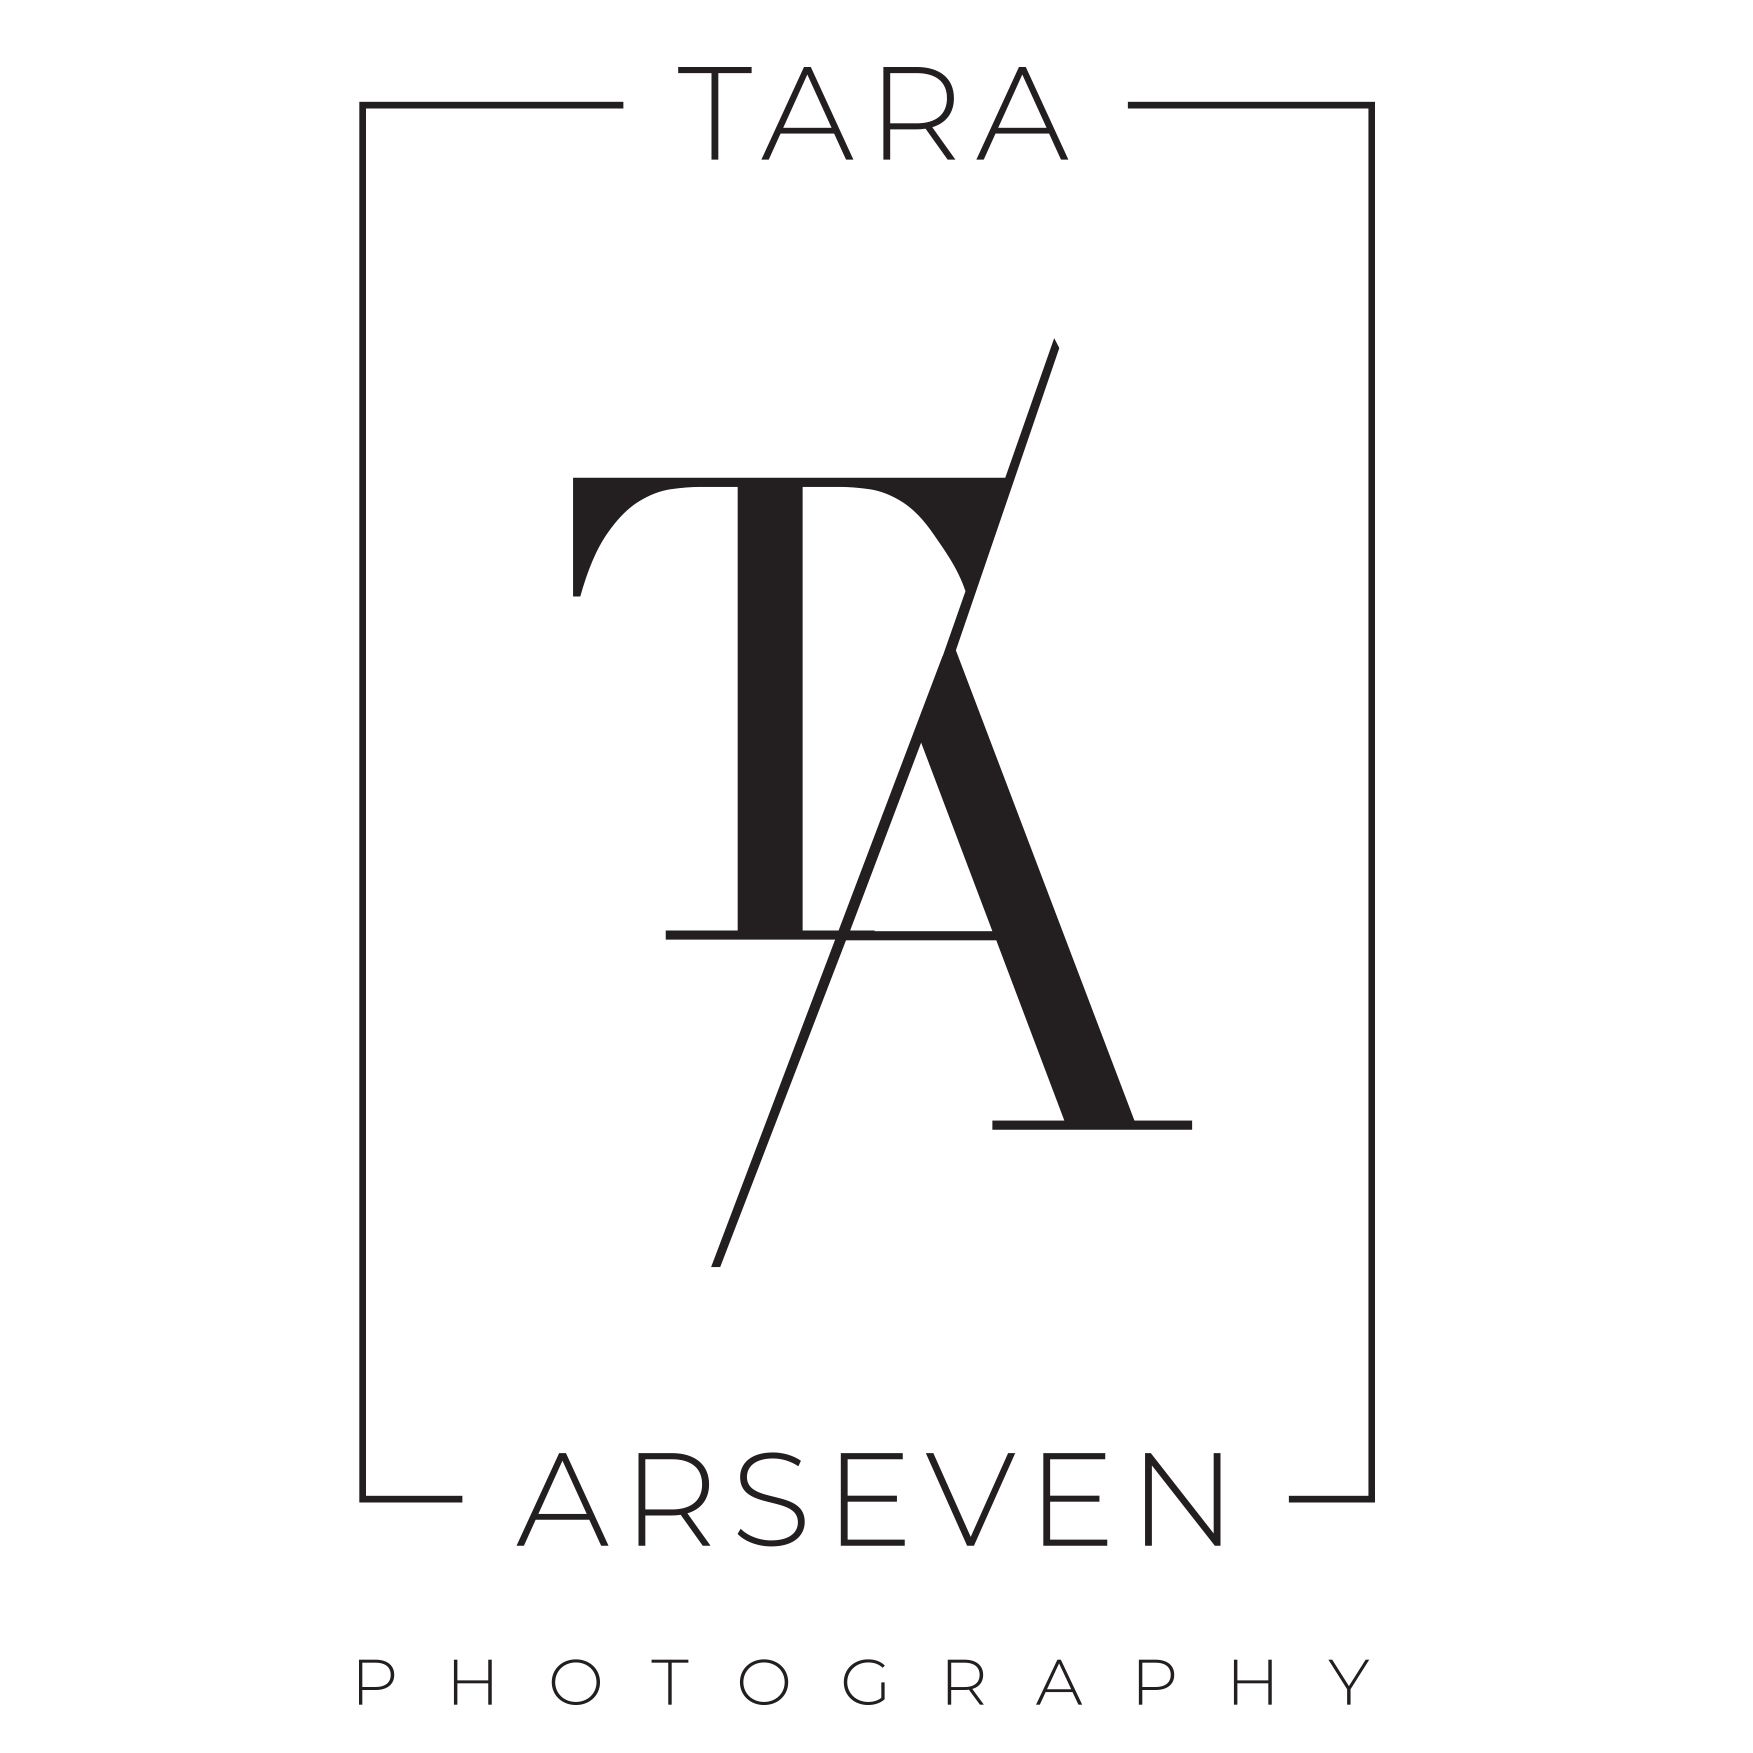 Tara Arseven Photography logo